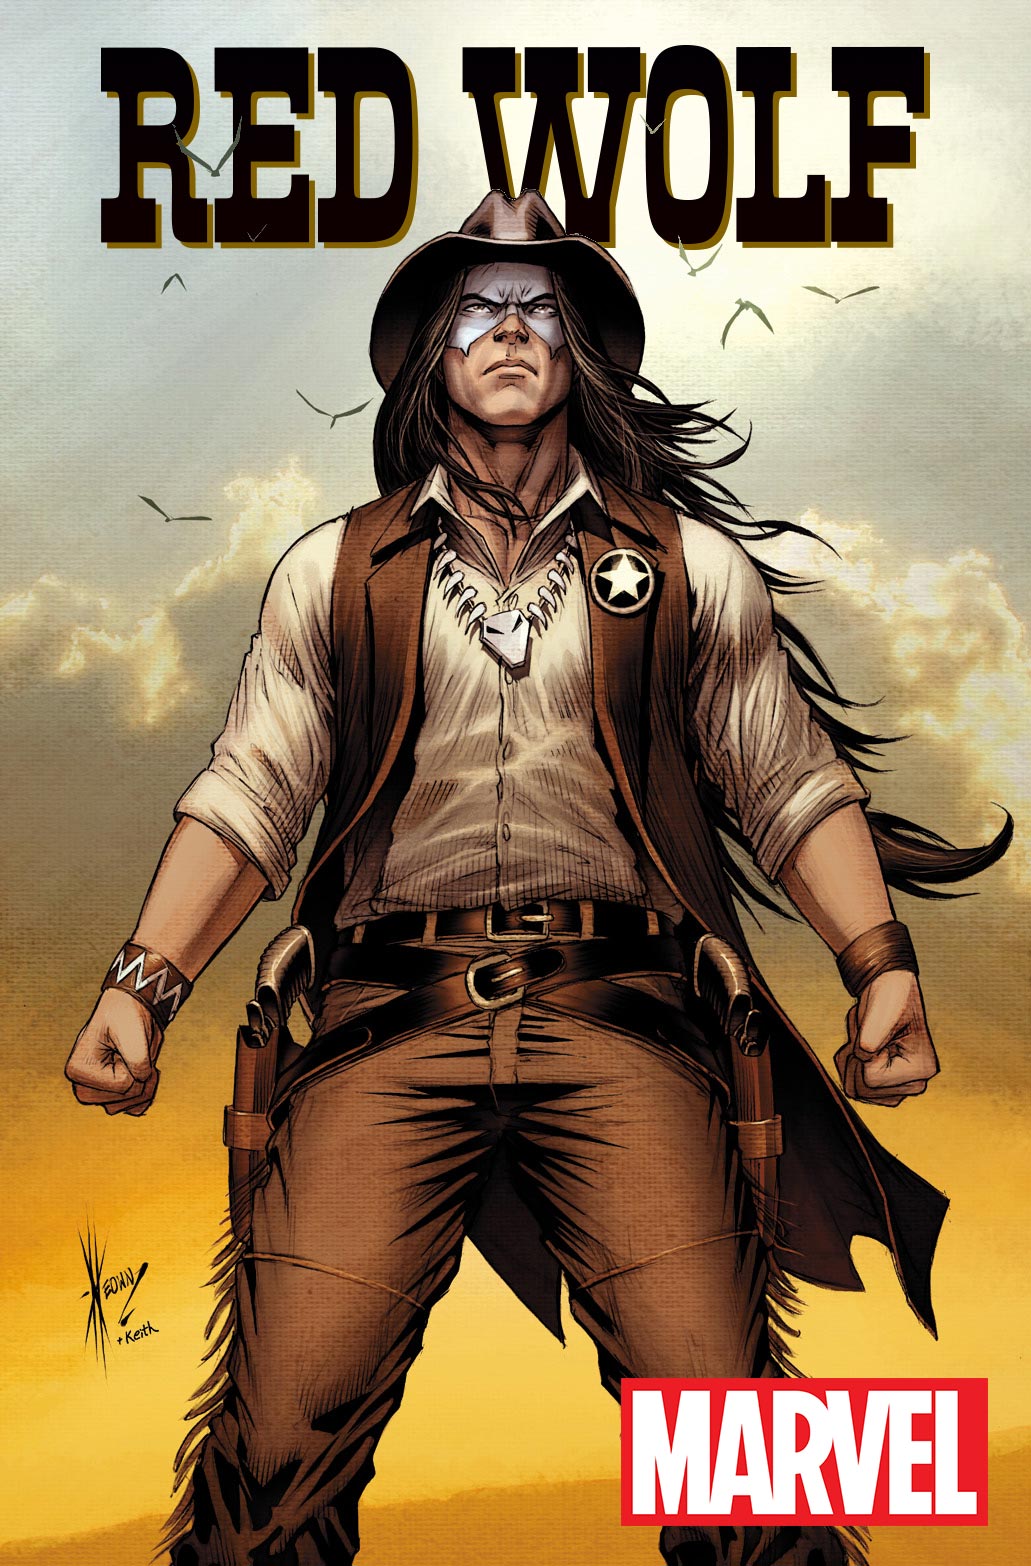 Marvel’s New Native American Superhero Comic Leans Too Hard On Old Tropes